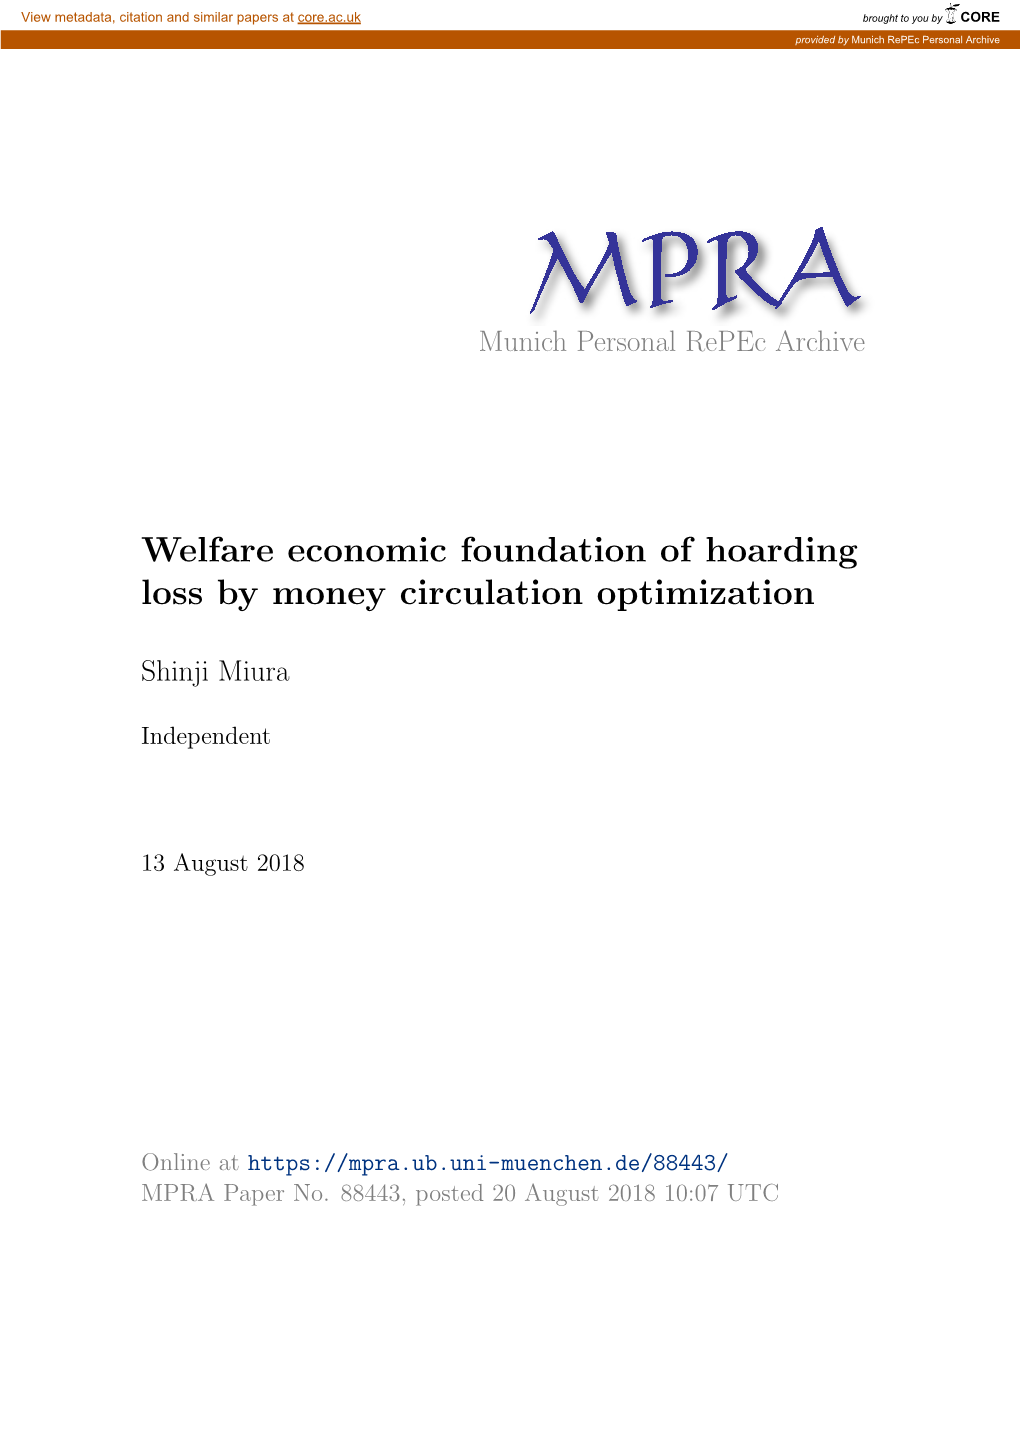 Welfare Economic Foundation of Hoarding Loss by Money Circulation Optimization